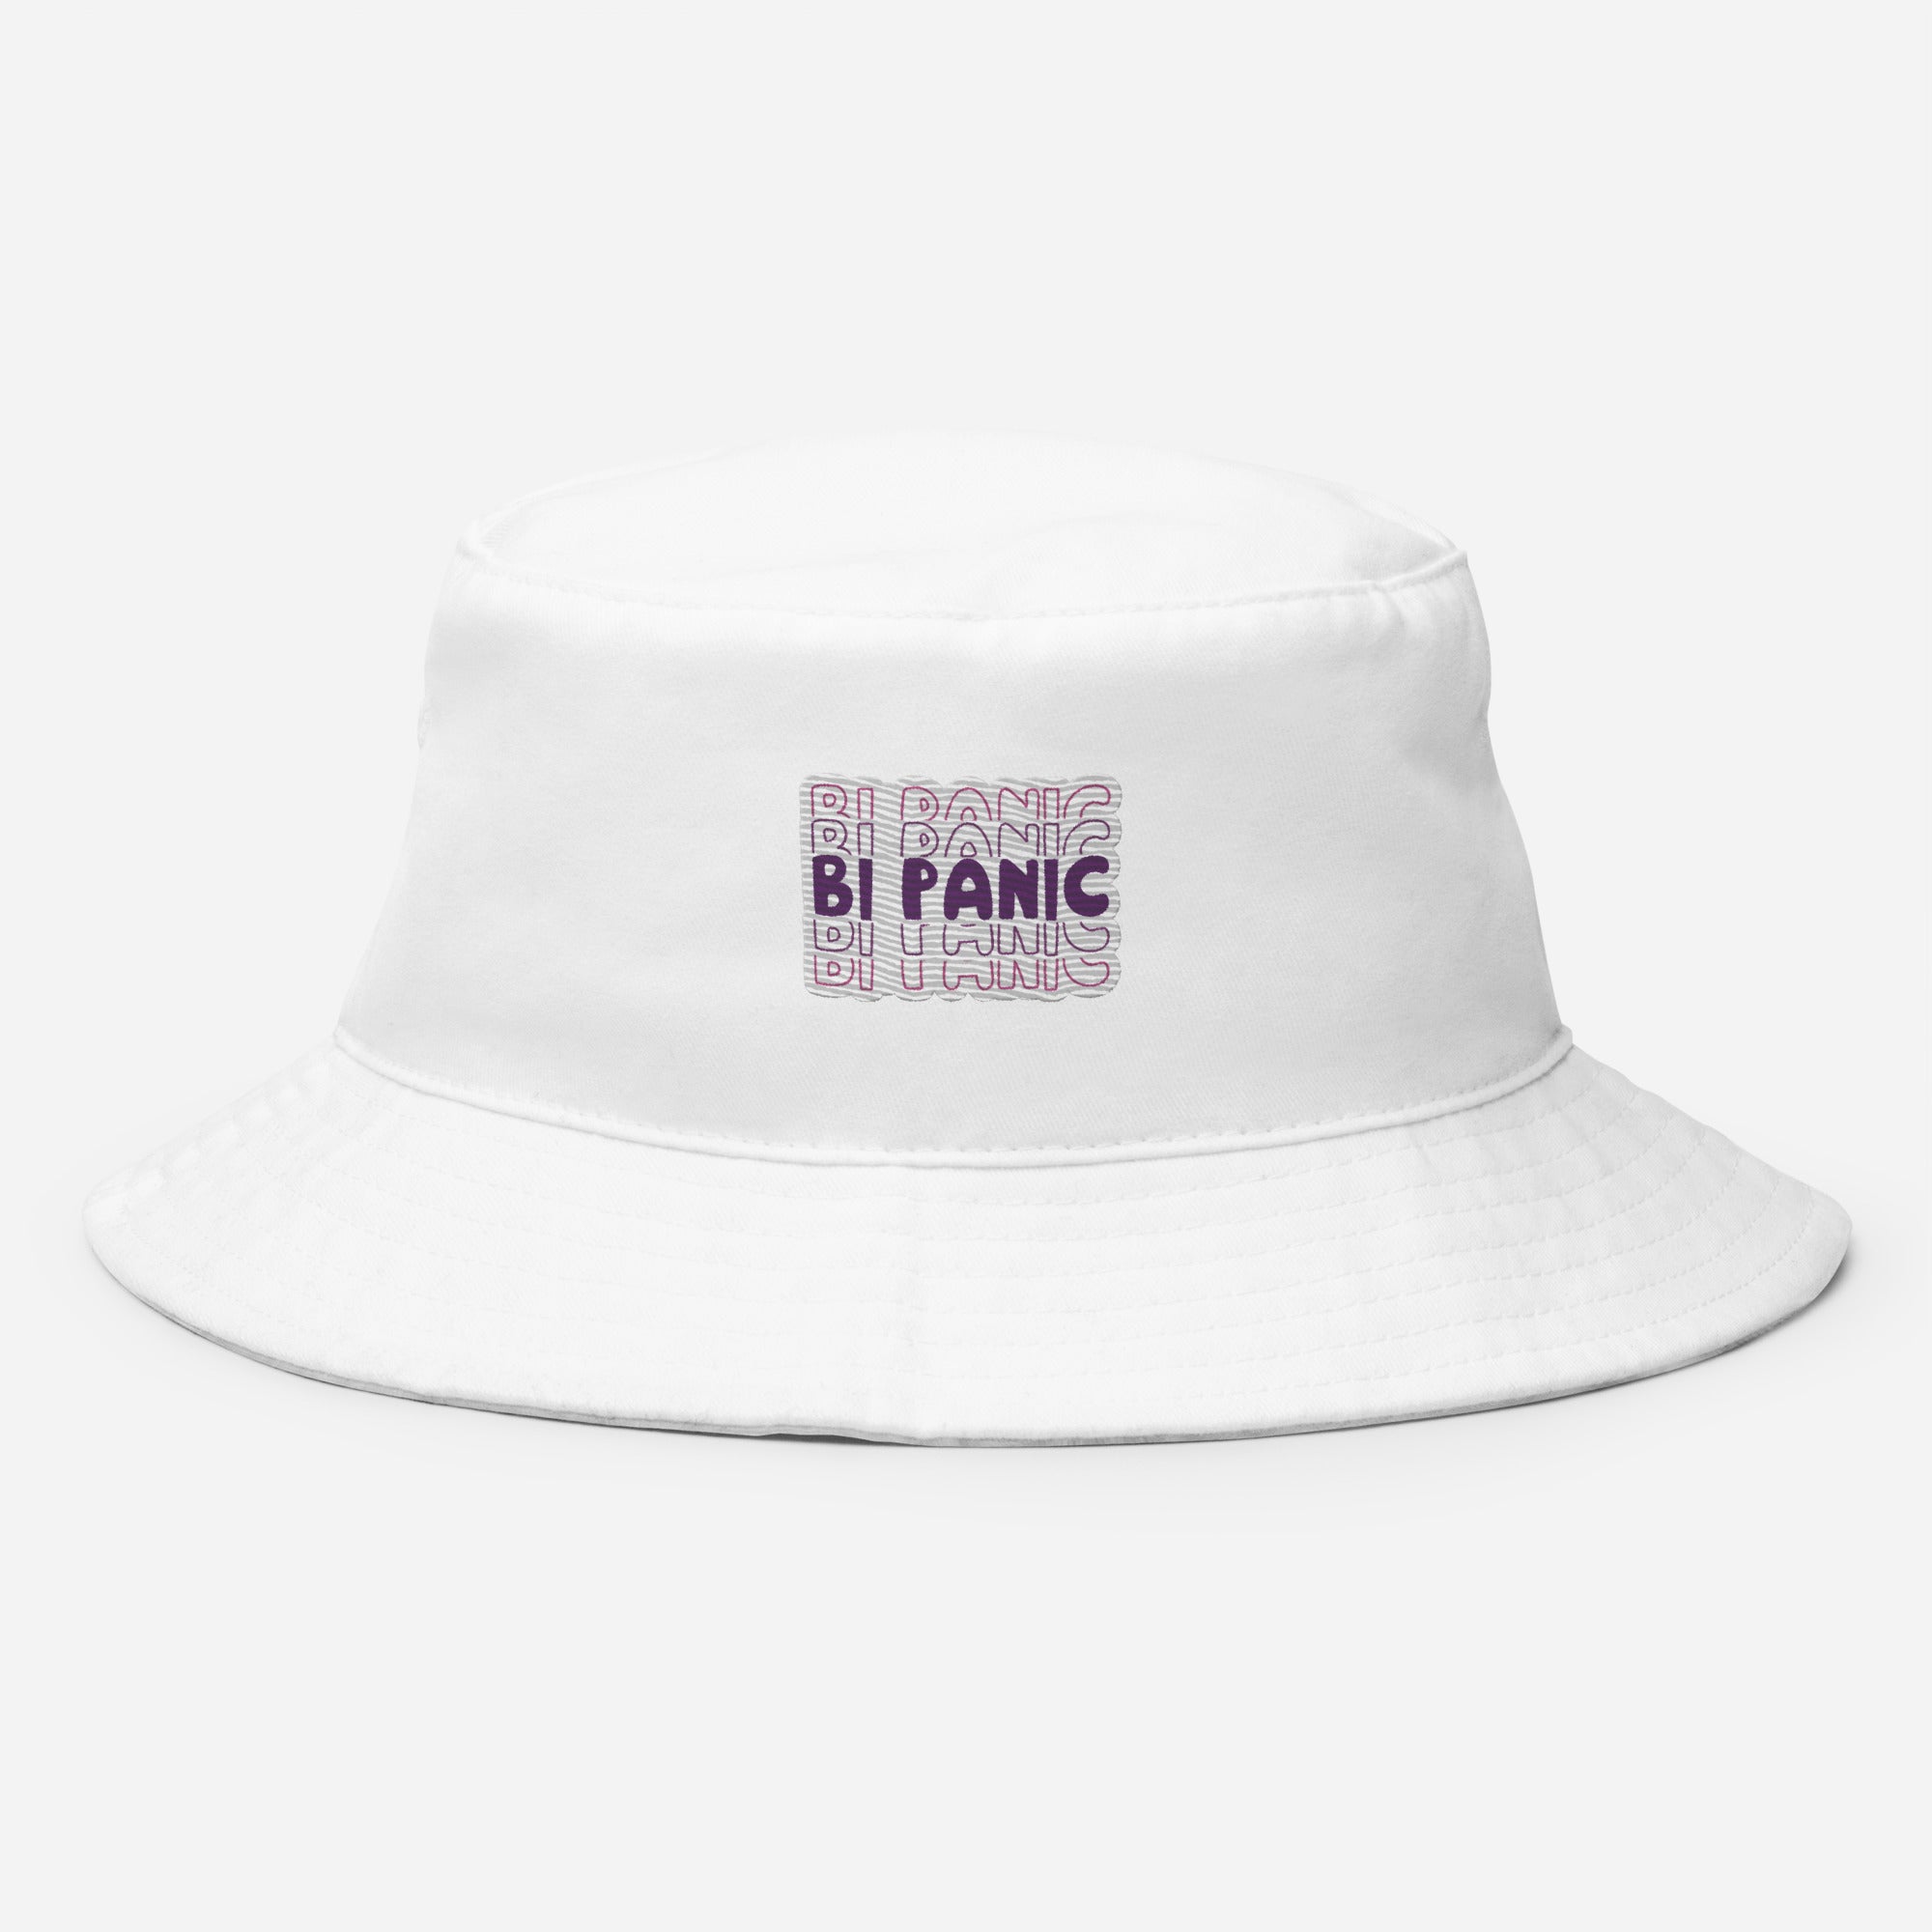 BI PANIC Premium Embriodered Bucket Hat